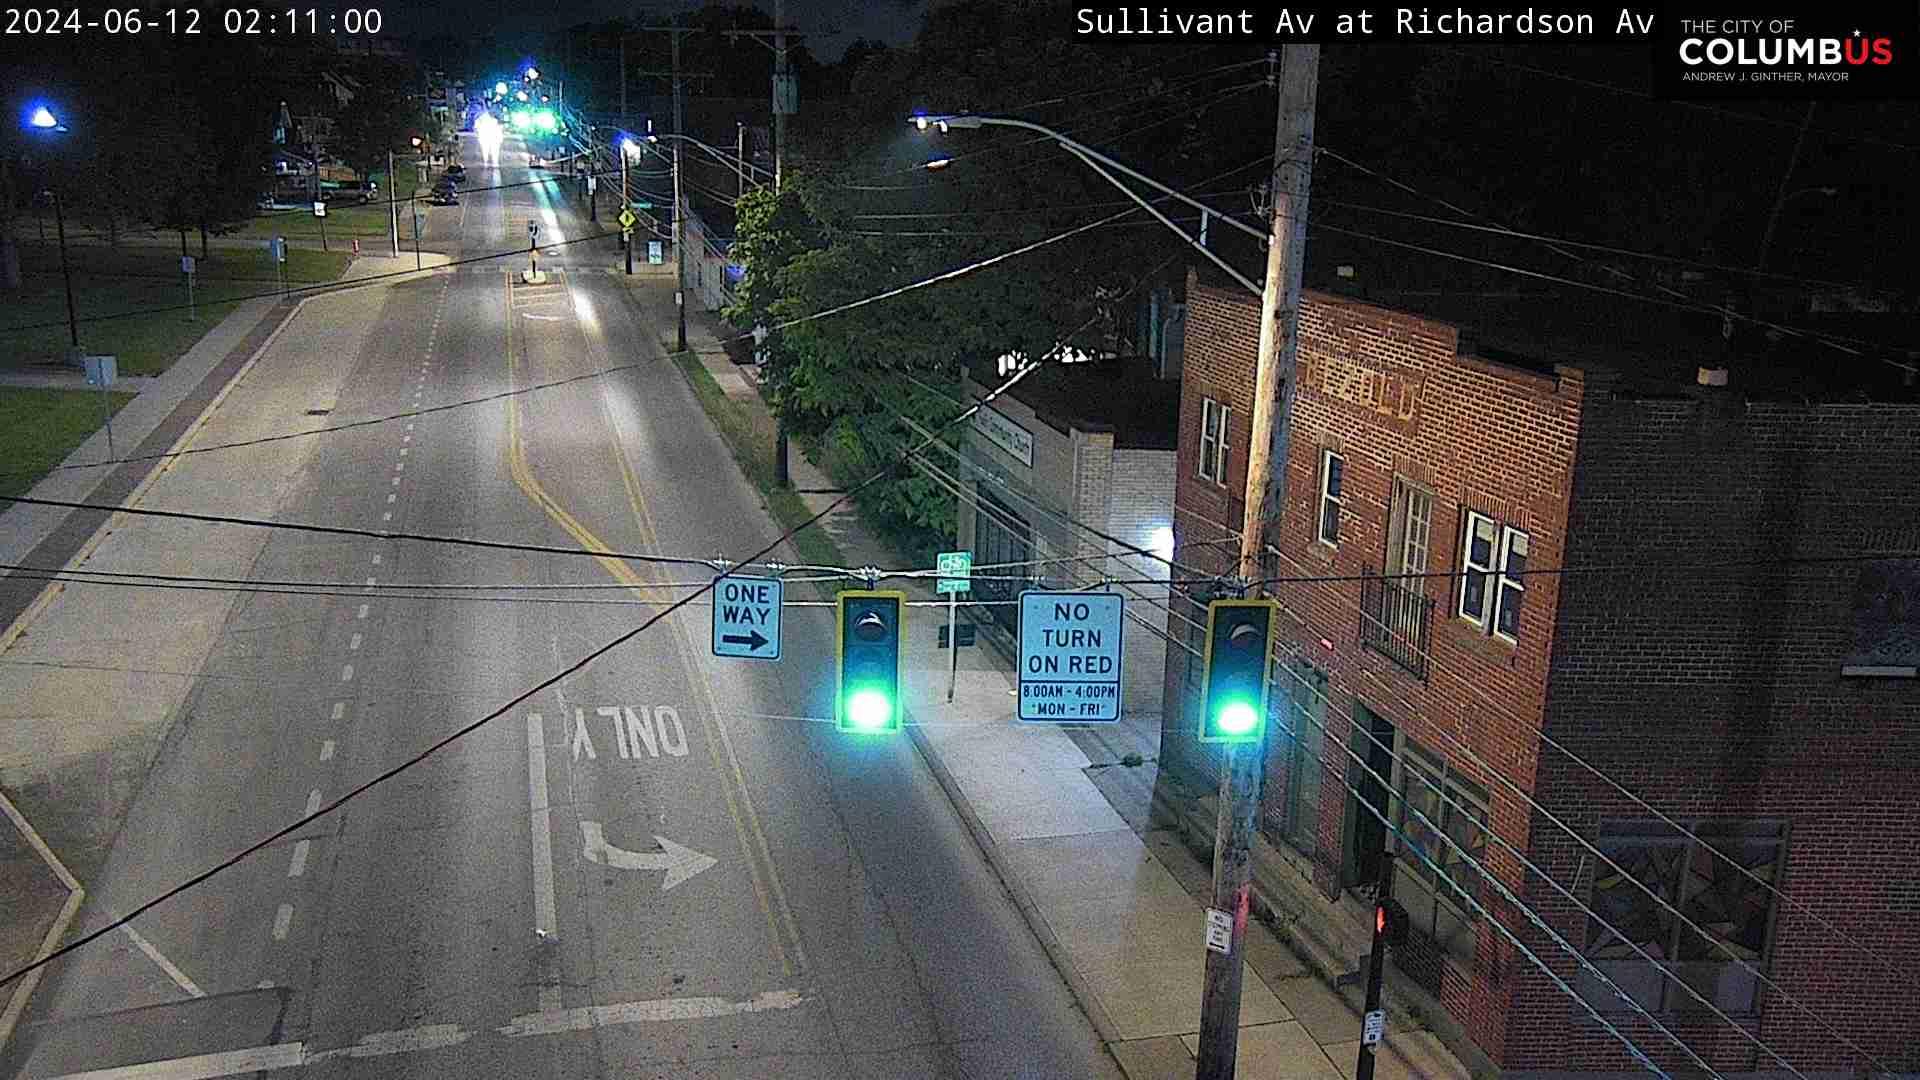 Traffic Cam Hilltop: City of Columbus) Sullivant Ave at Richadson Ave